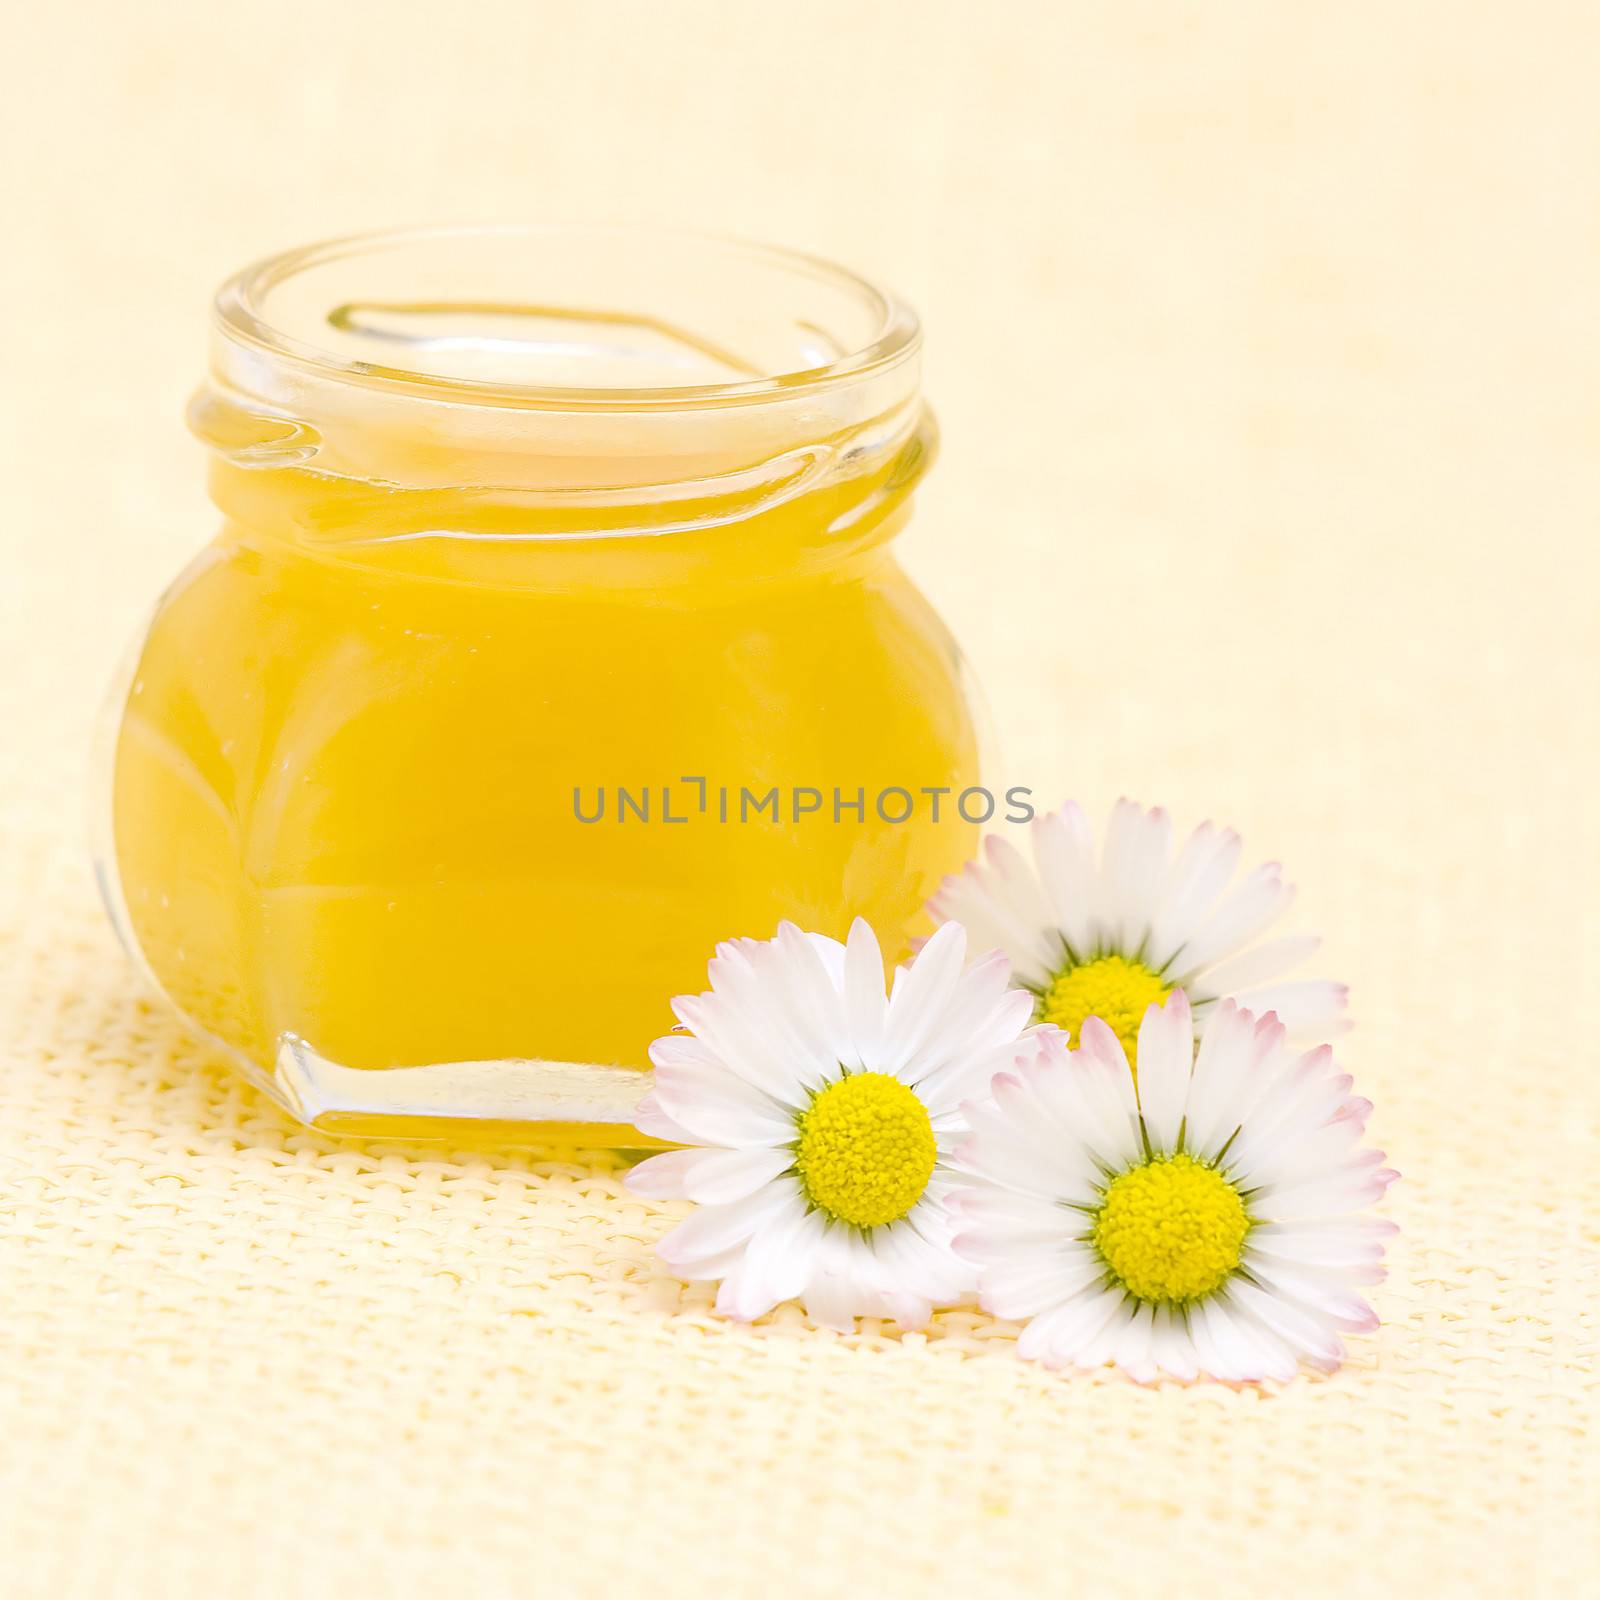 honey and daisies by miradrozdowski